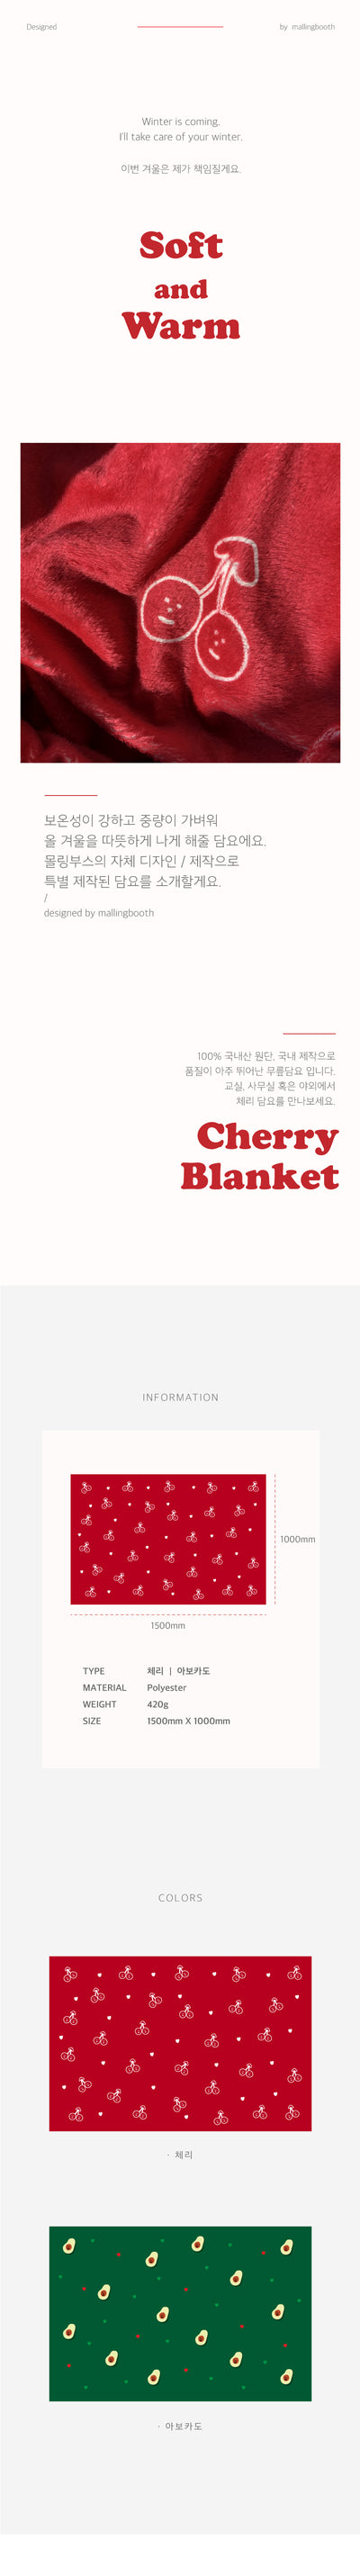 Cherry blanket